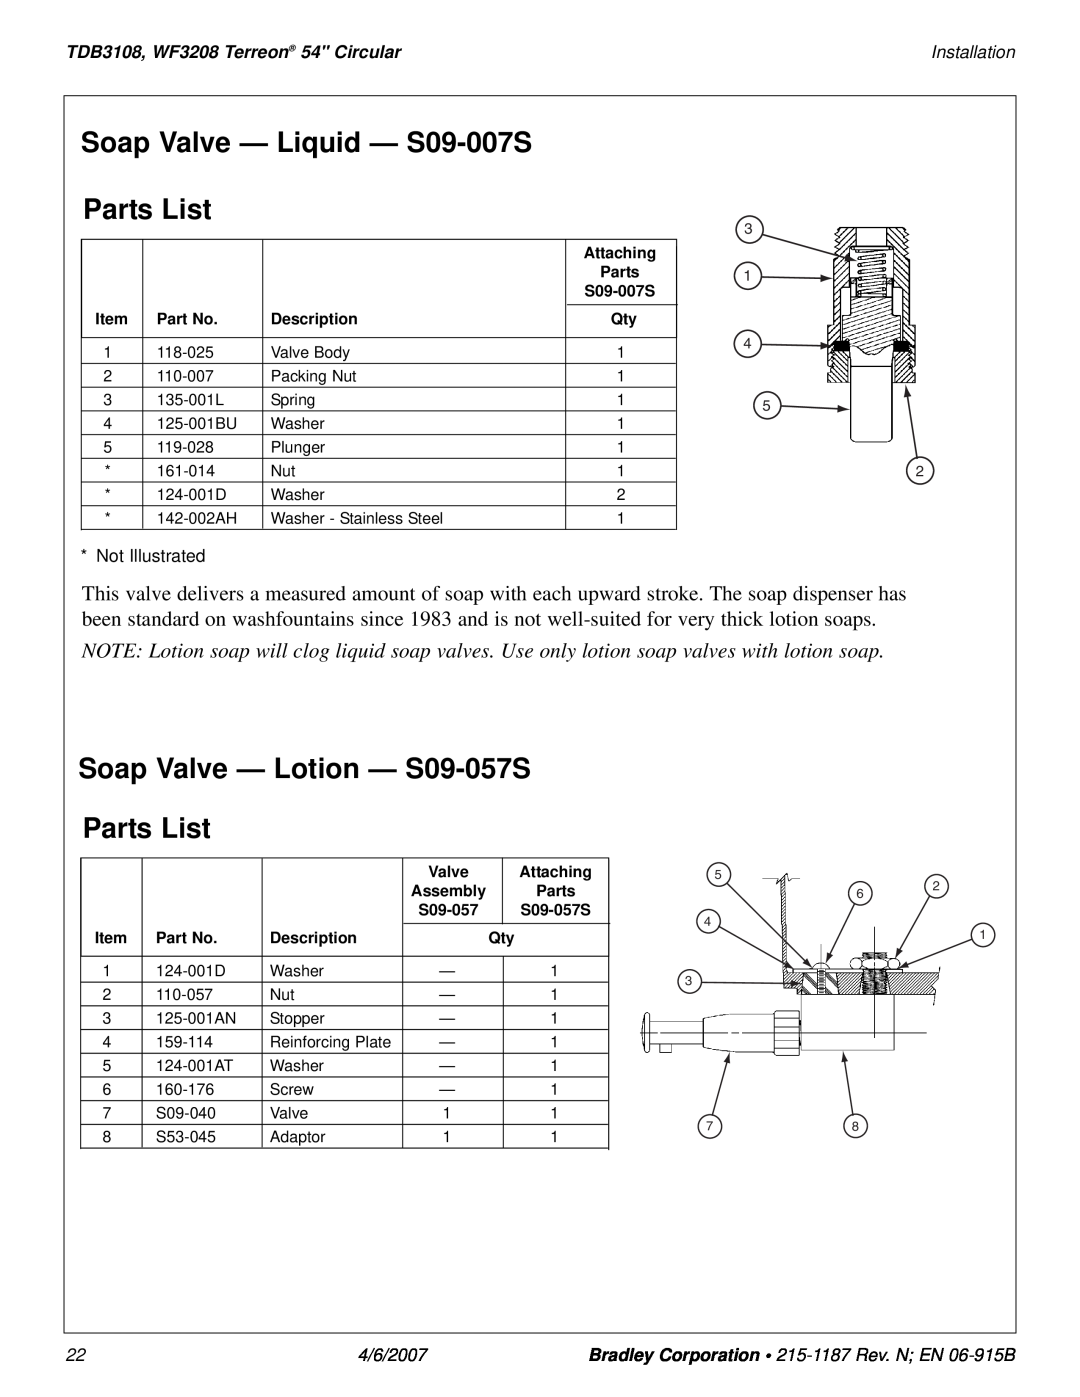 Bradley Smoker TDB3108 Soap Valve - Liquid - S09-007S Parts List, Soap Valve - Lotion - S09-057S Parts List, Installation 